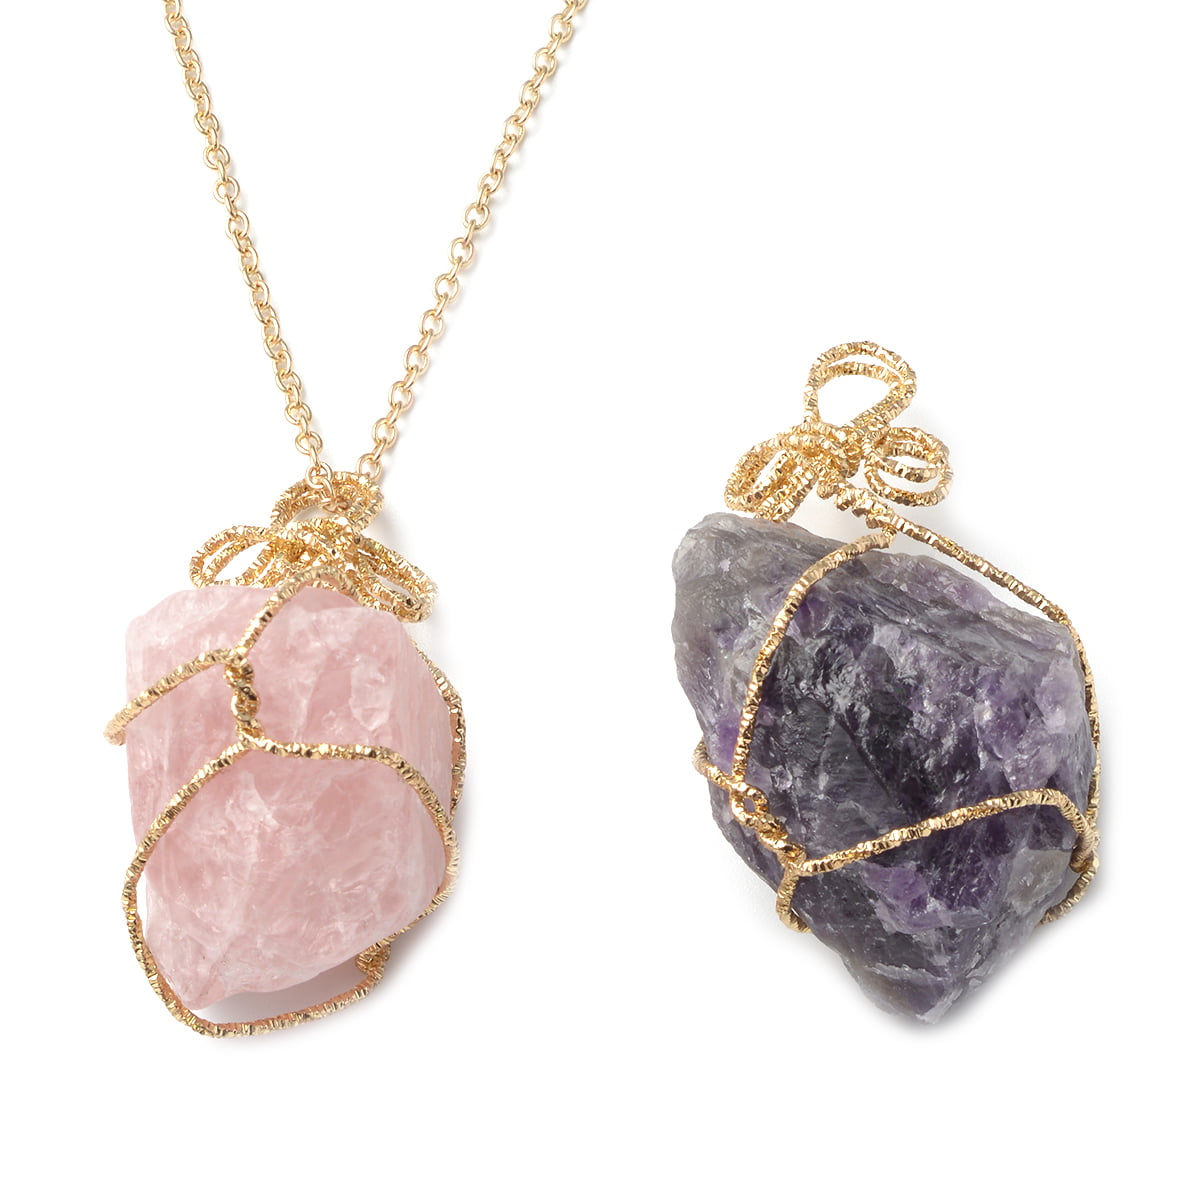 Amethyst and rose quartz long pendant